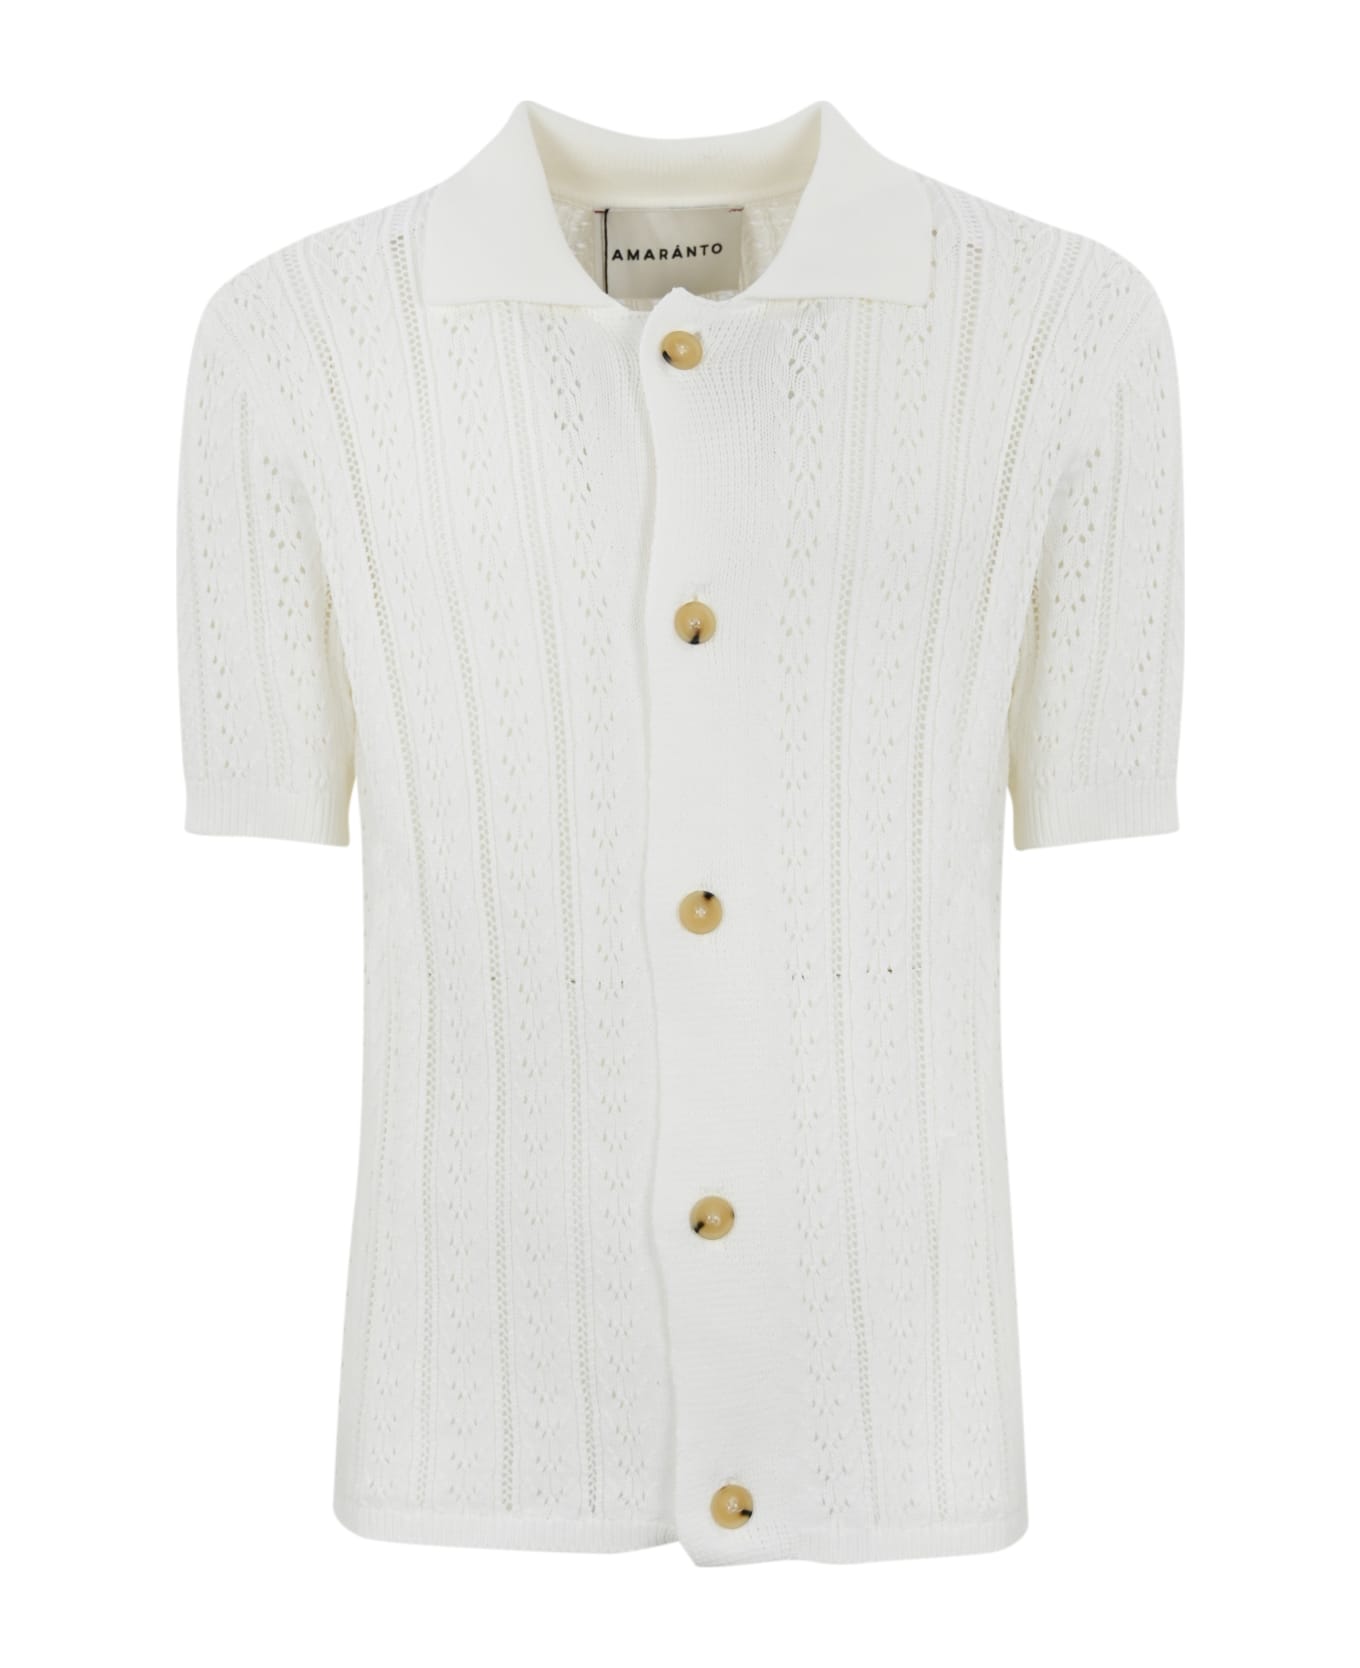 Amaranto Perforated Shirt - Bianco